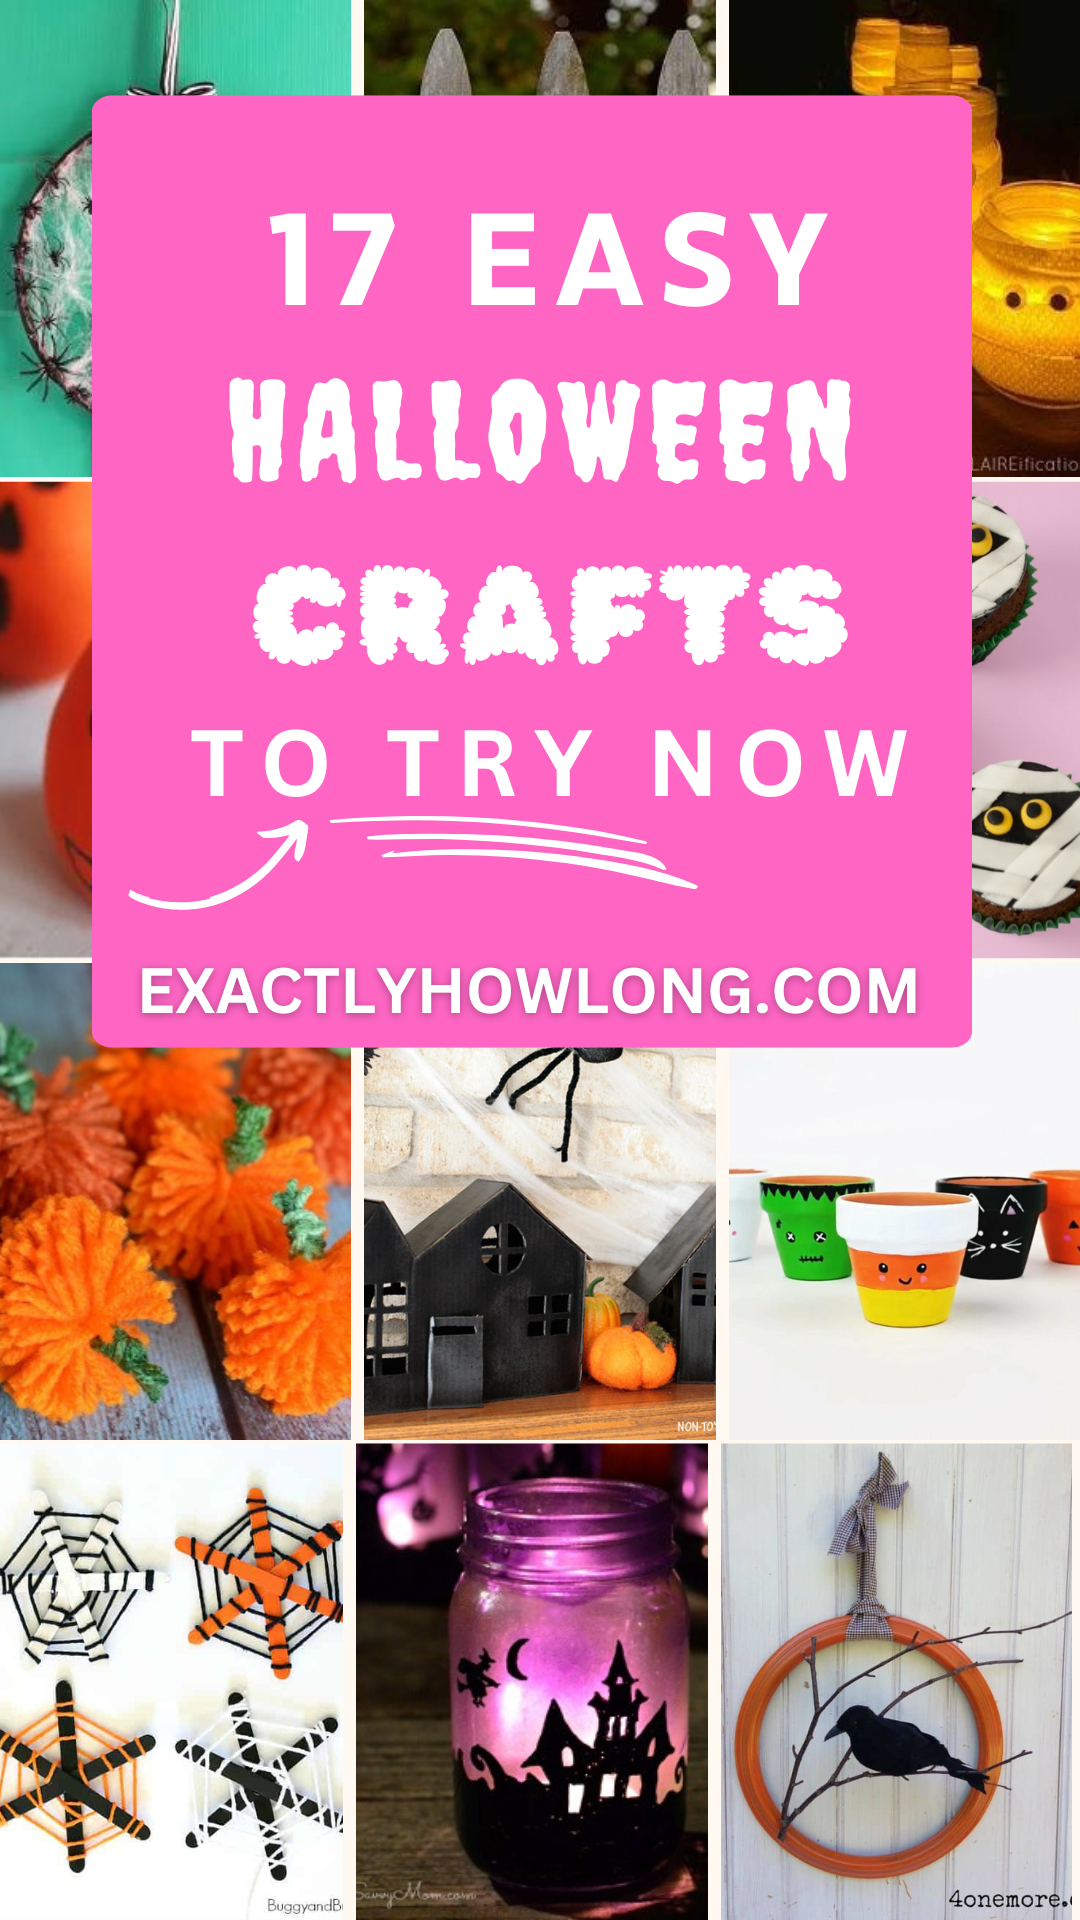 Adorable Halloween crafts for preschoolers to DIY at school.